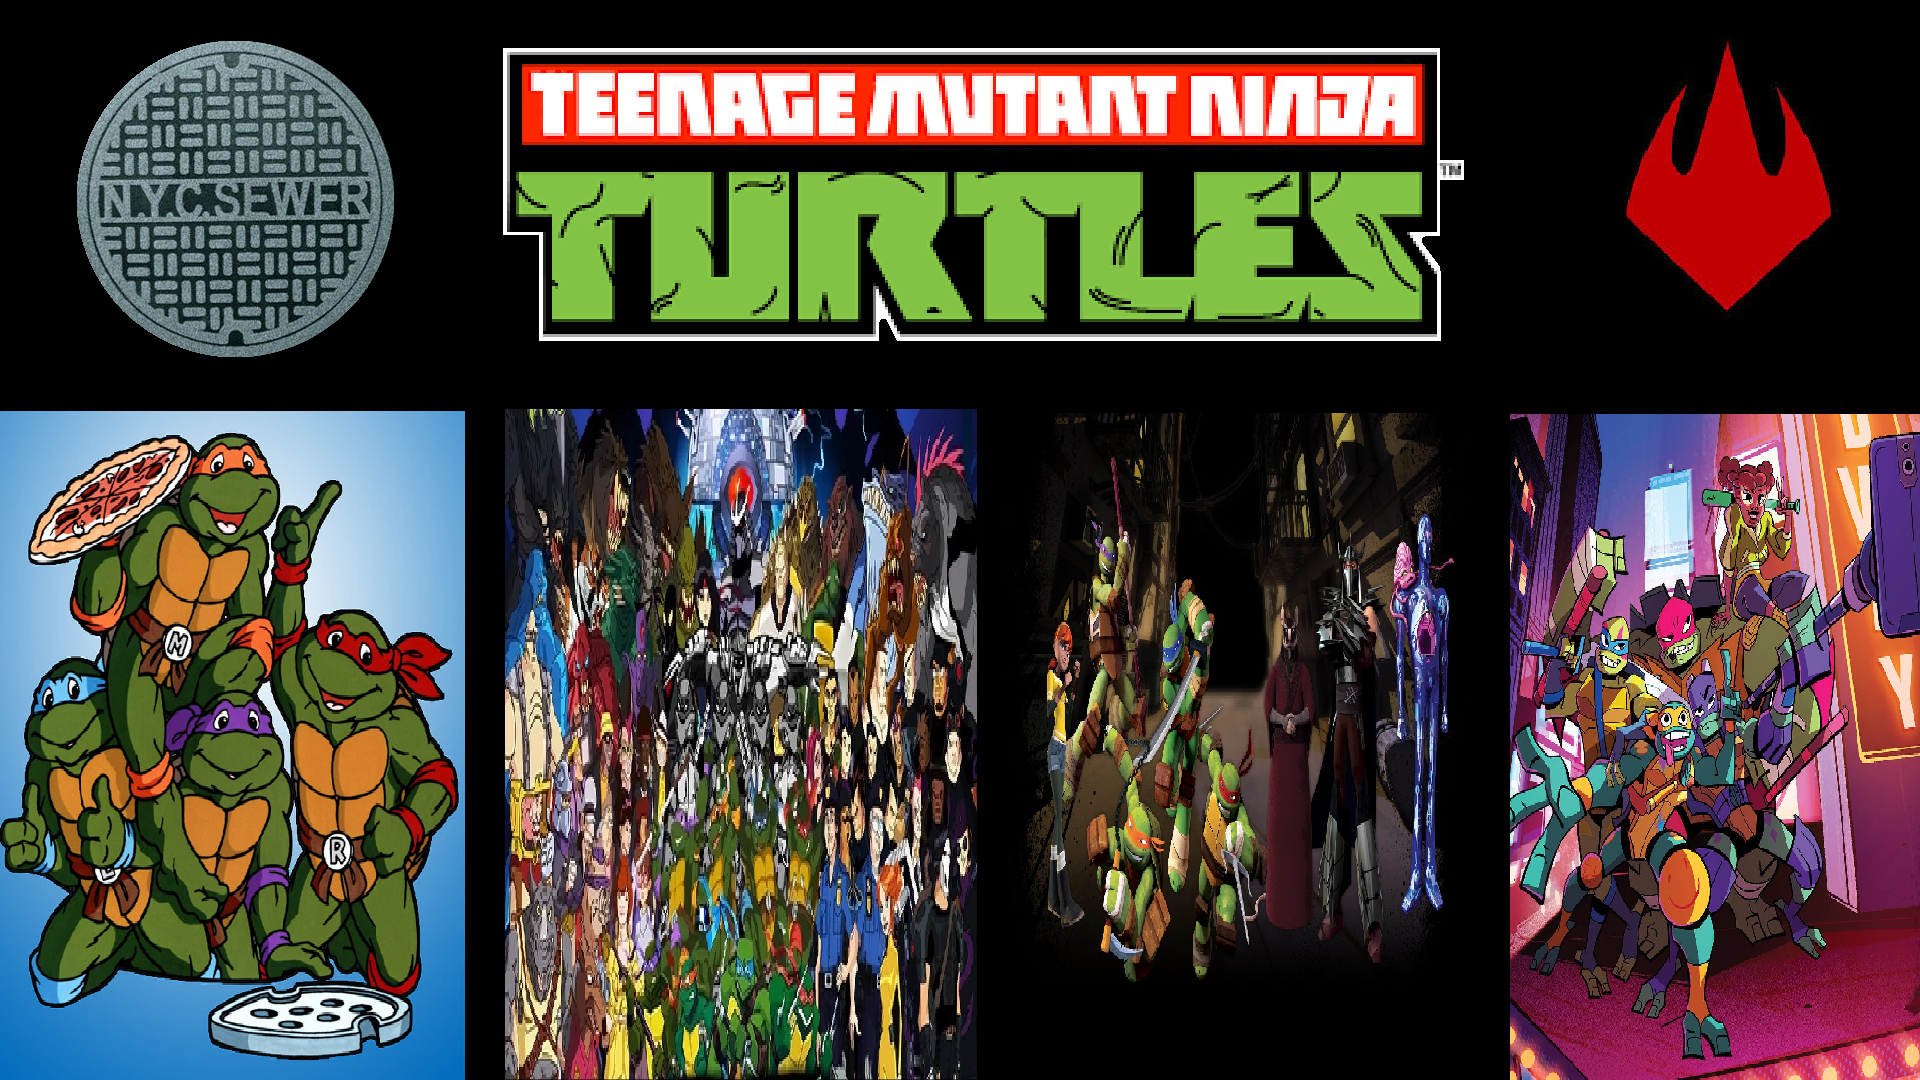 https://static.wikia.nocookie.net/viacom4633/images/0/01/Teenage_Mutant_Ninja_Turtles_Turtles_%28franchise%29.png/revision/latest?cb=20211130192900